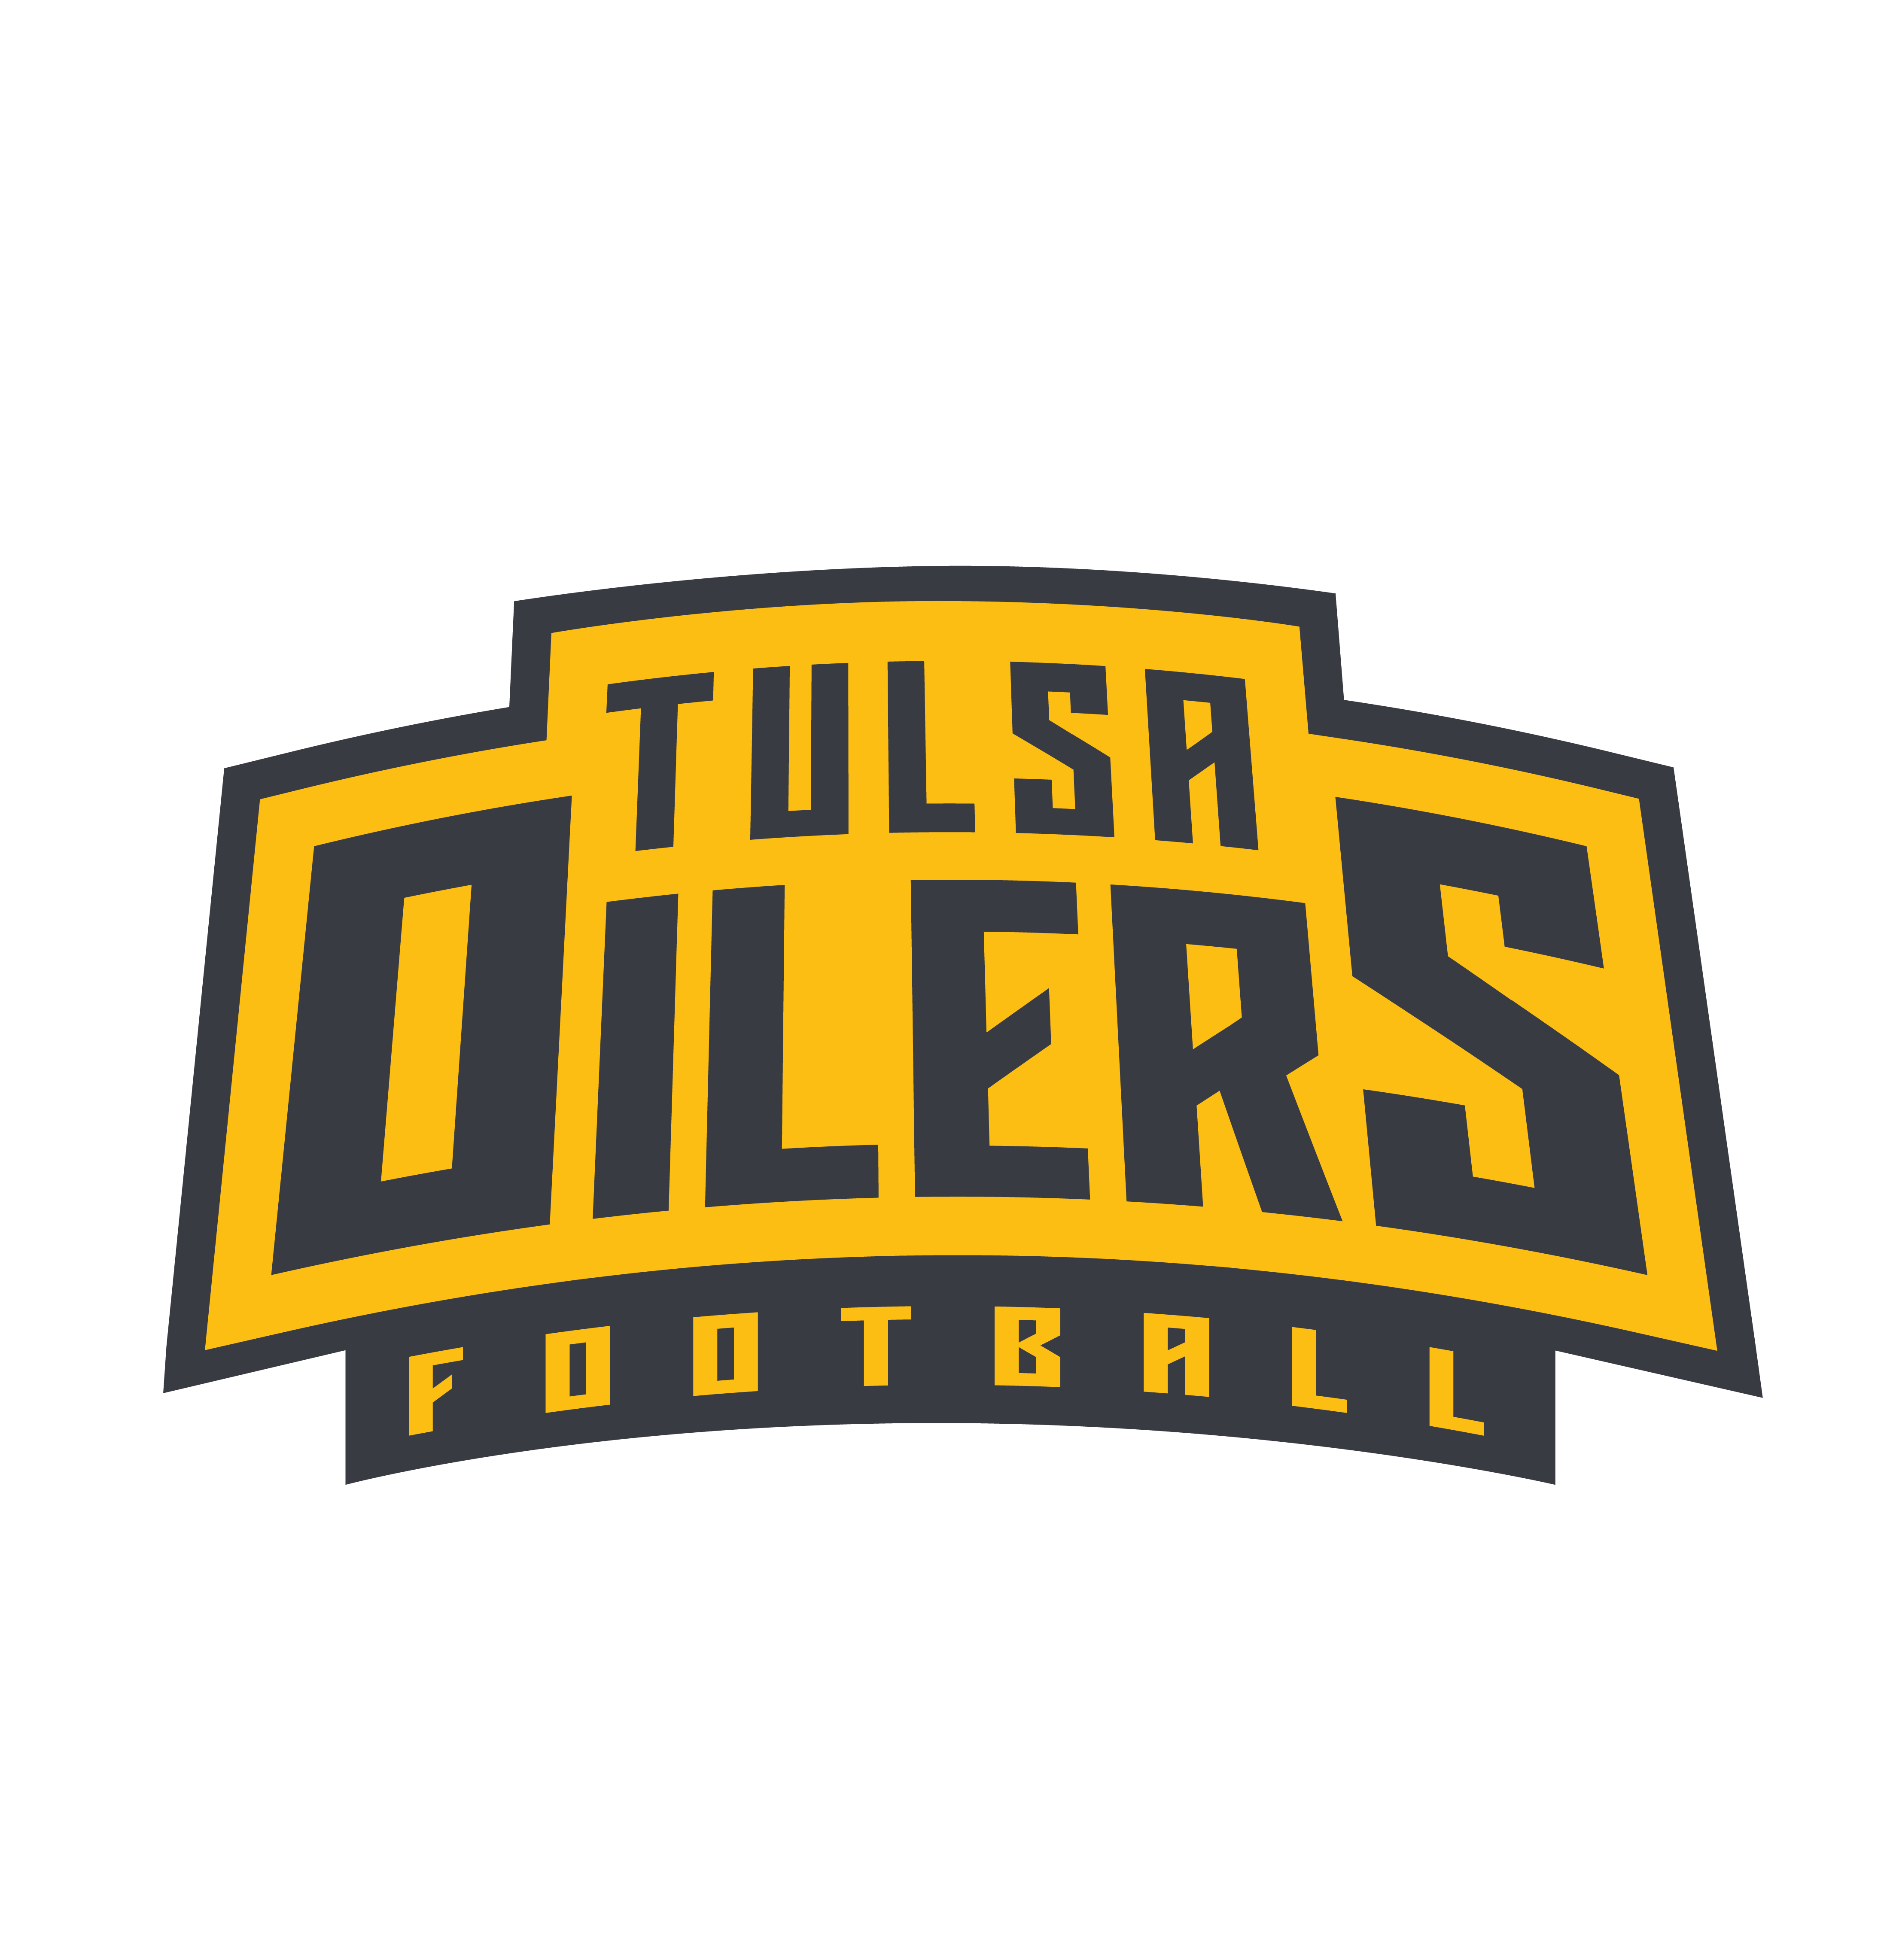 Home  Tulsa Oilers Store